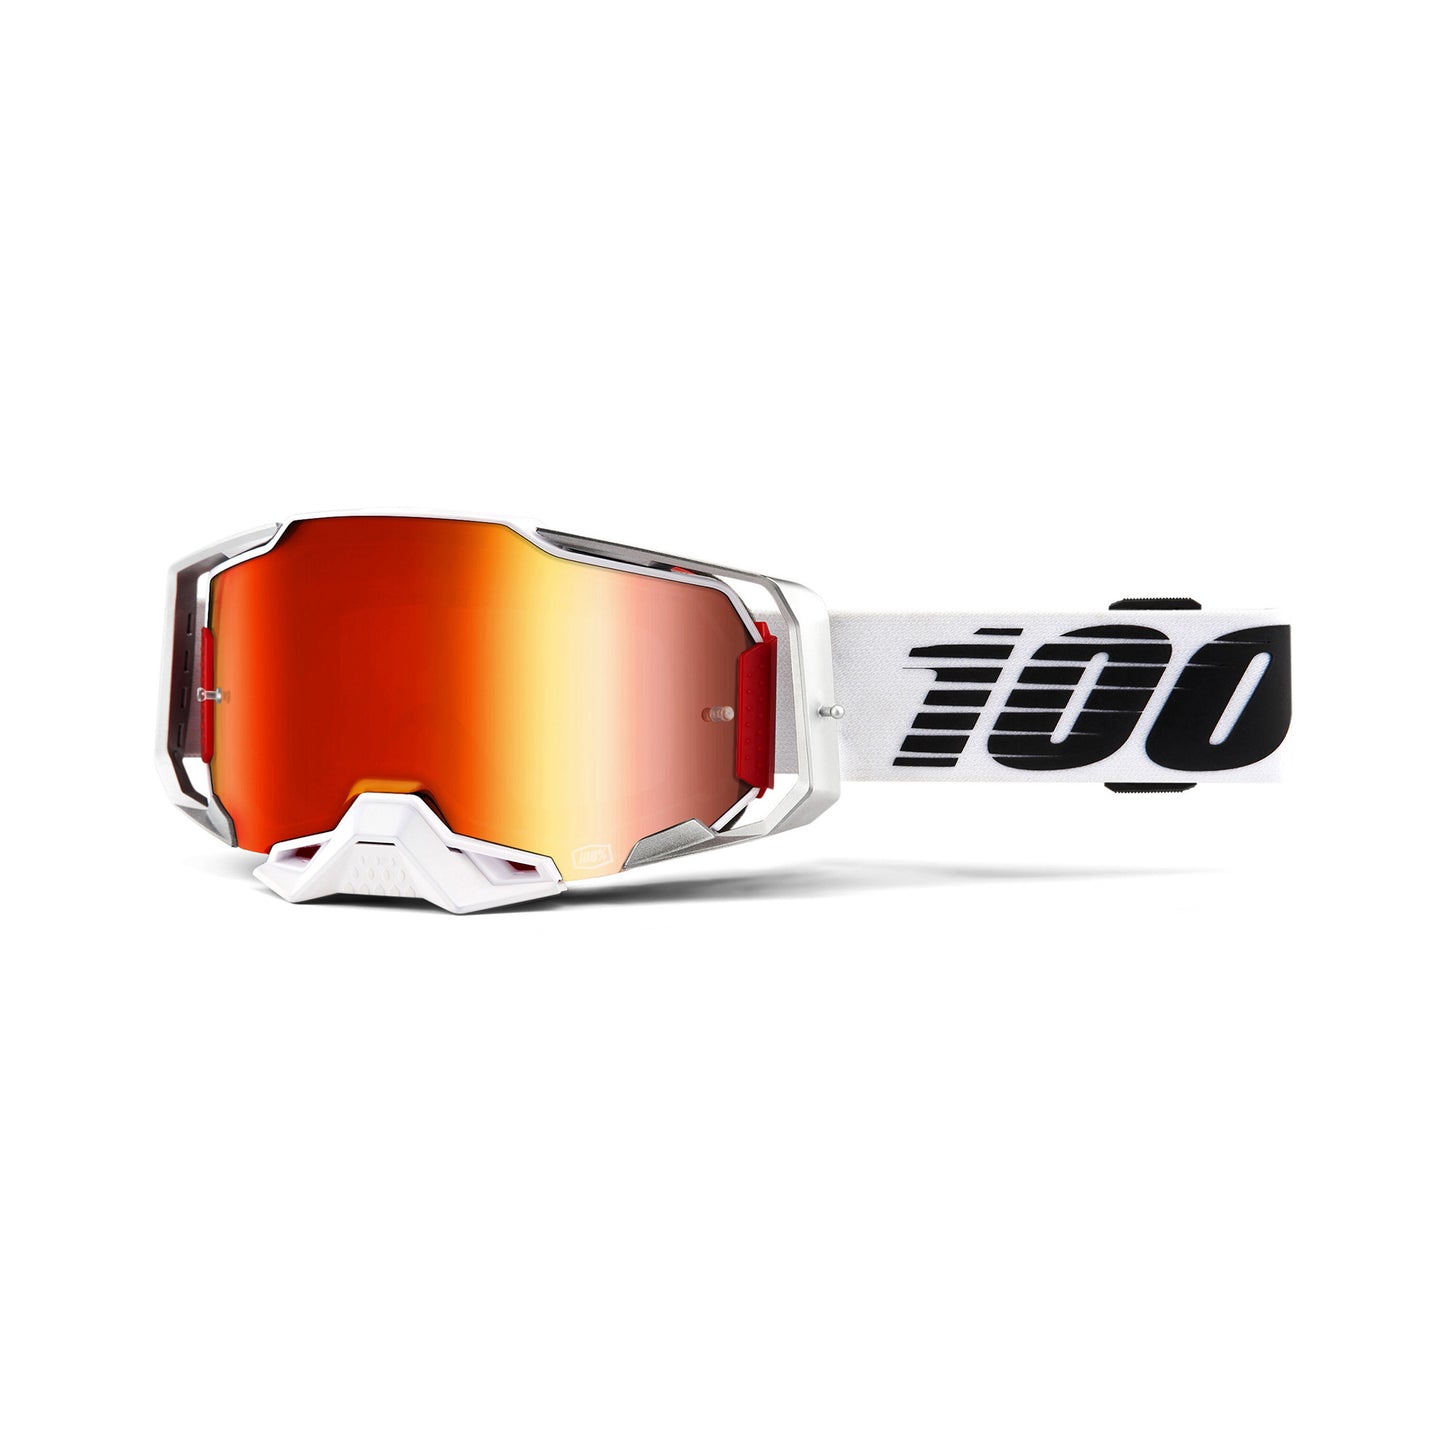 100 Percent Armega Goggles - Lightsaber - Red Mirror Lens